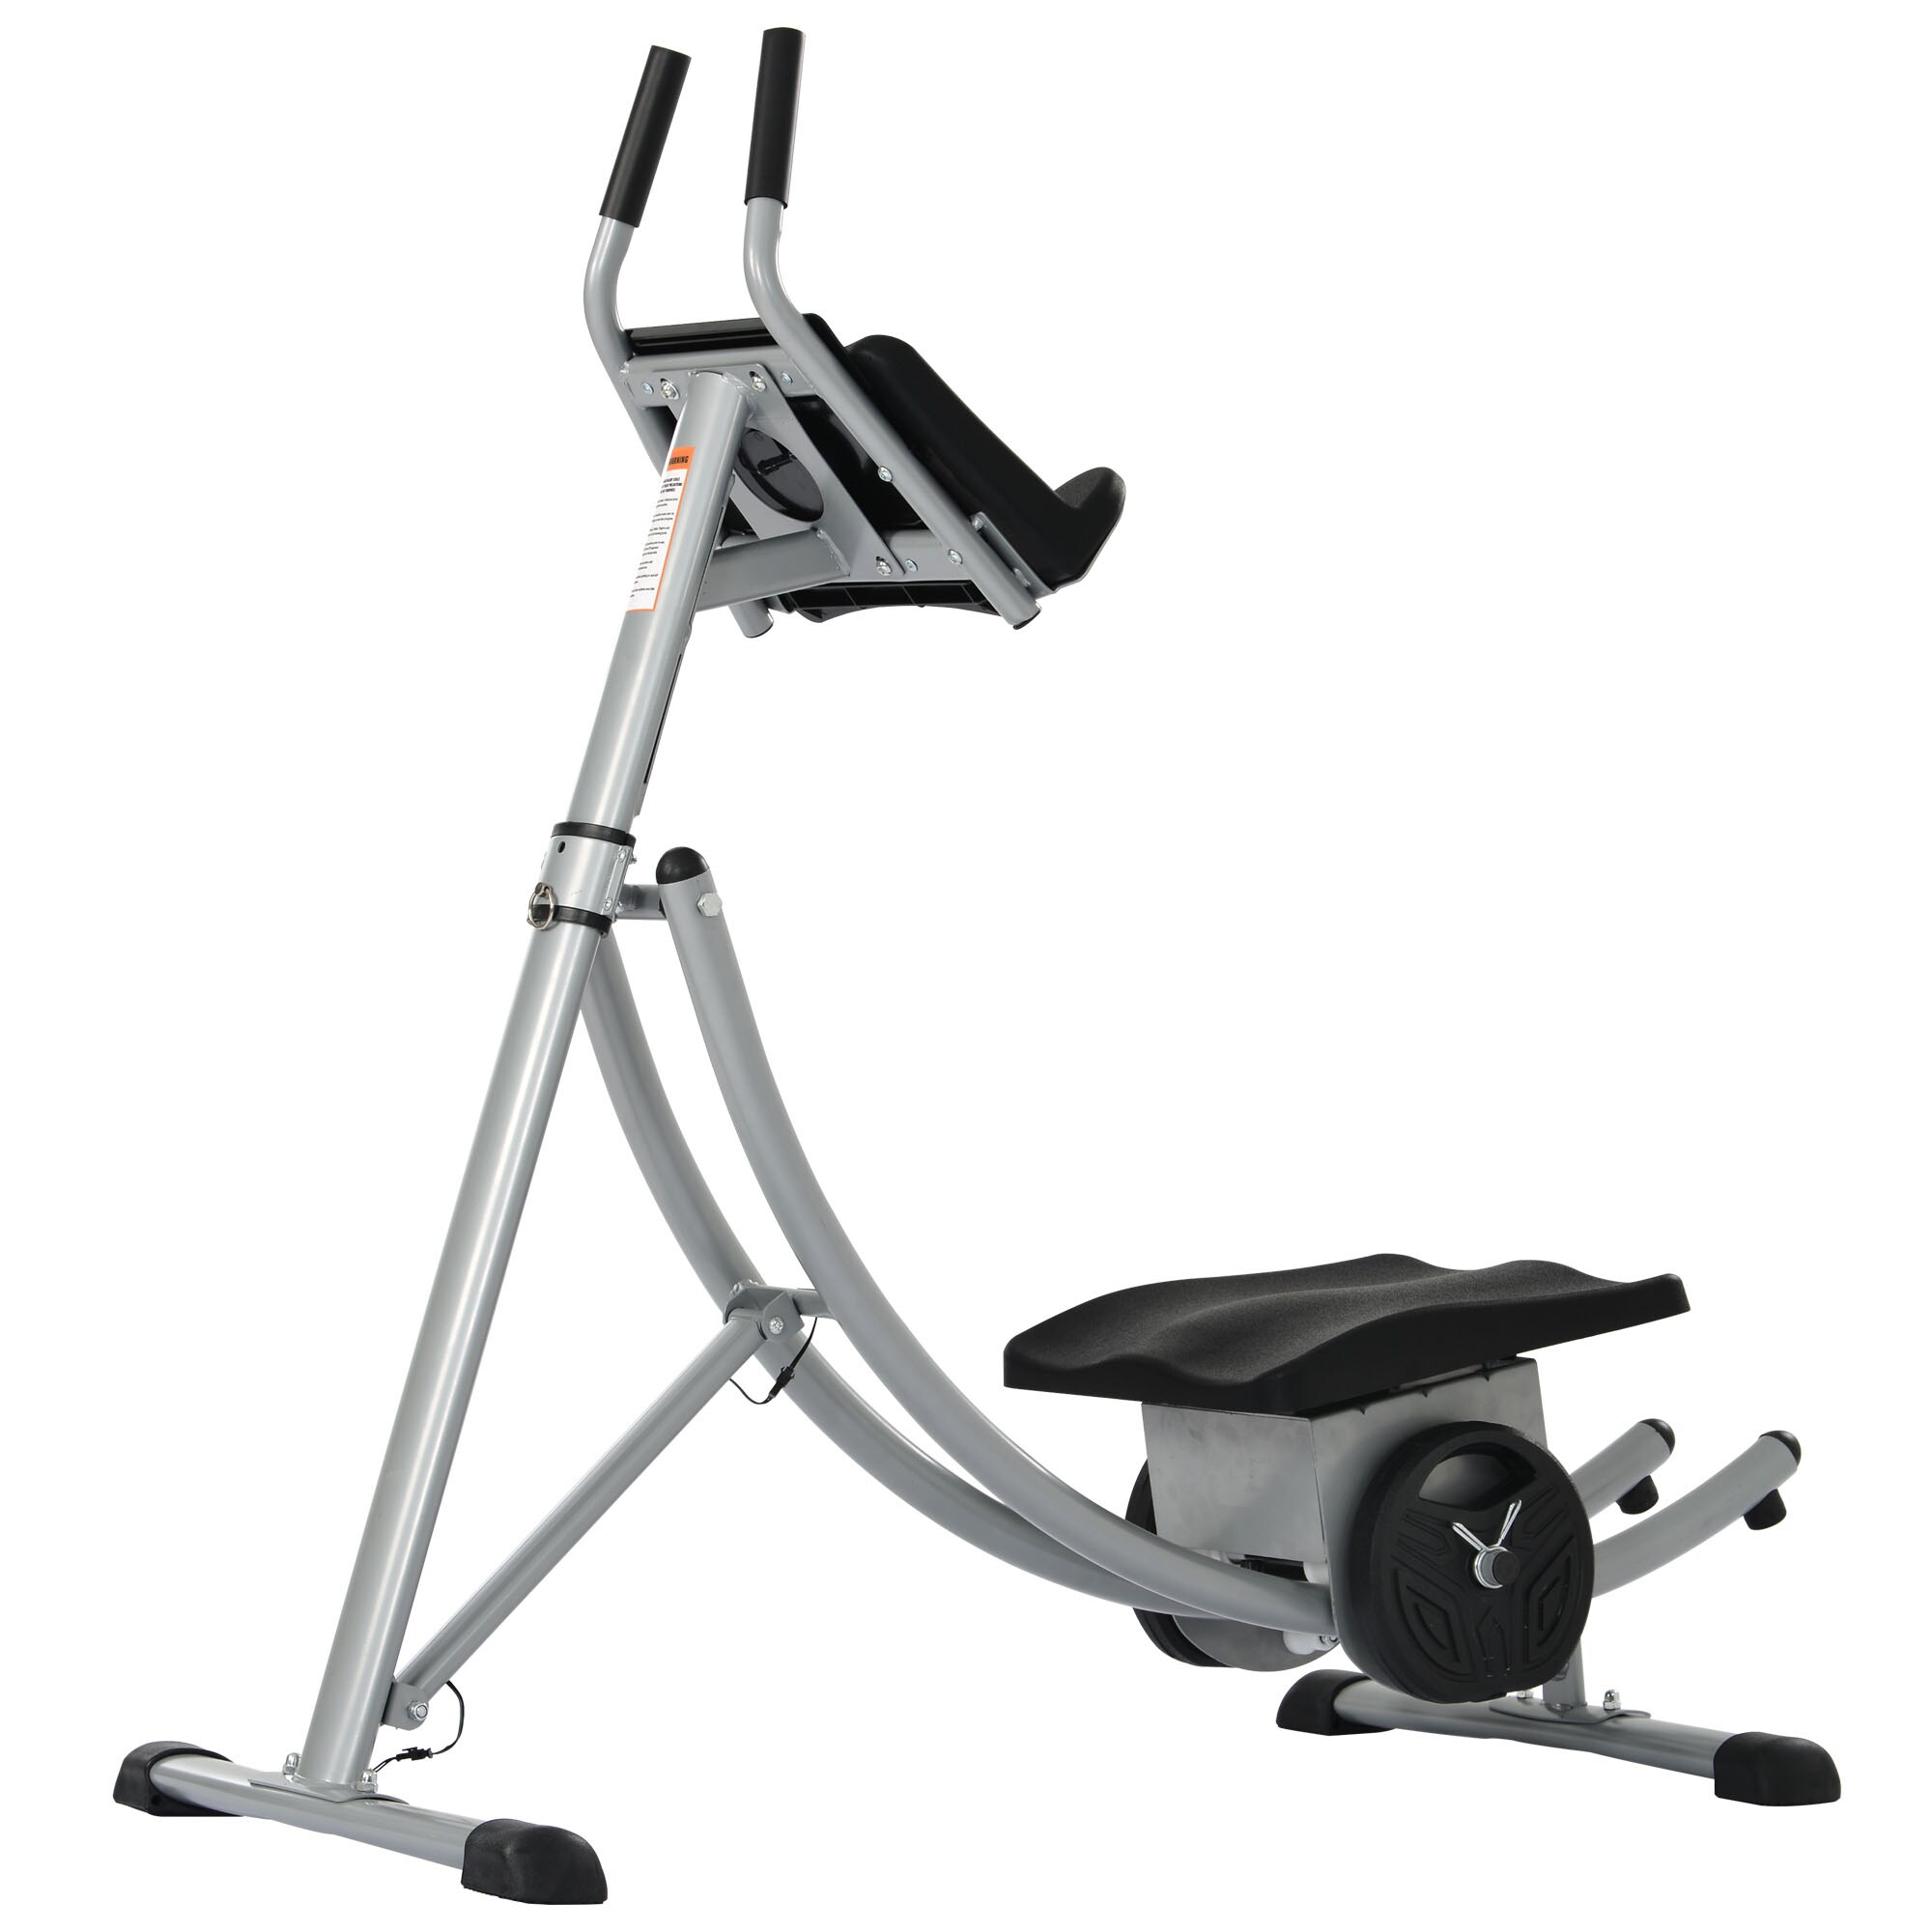 CASAINC Fitness & Exercise Equipment at